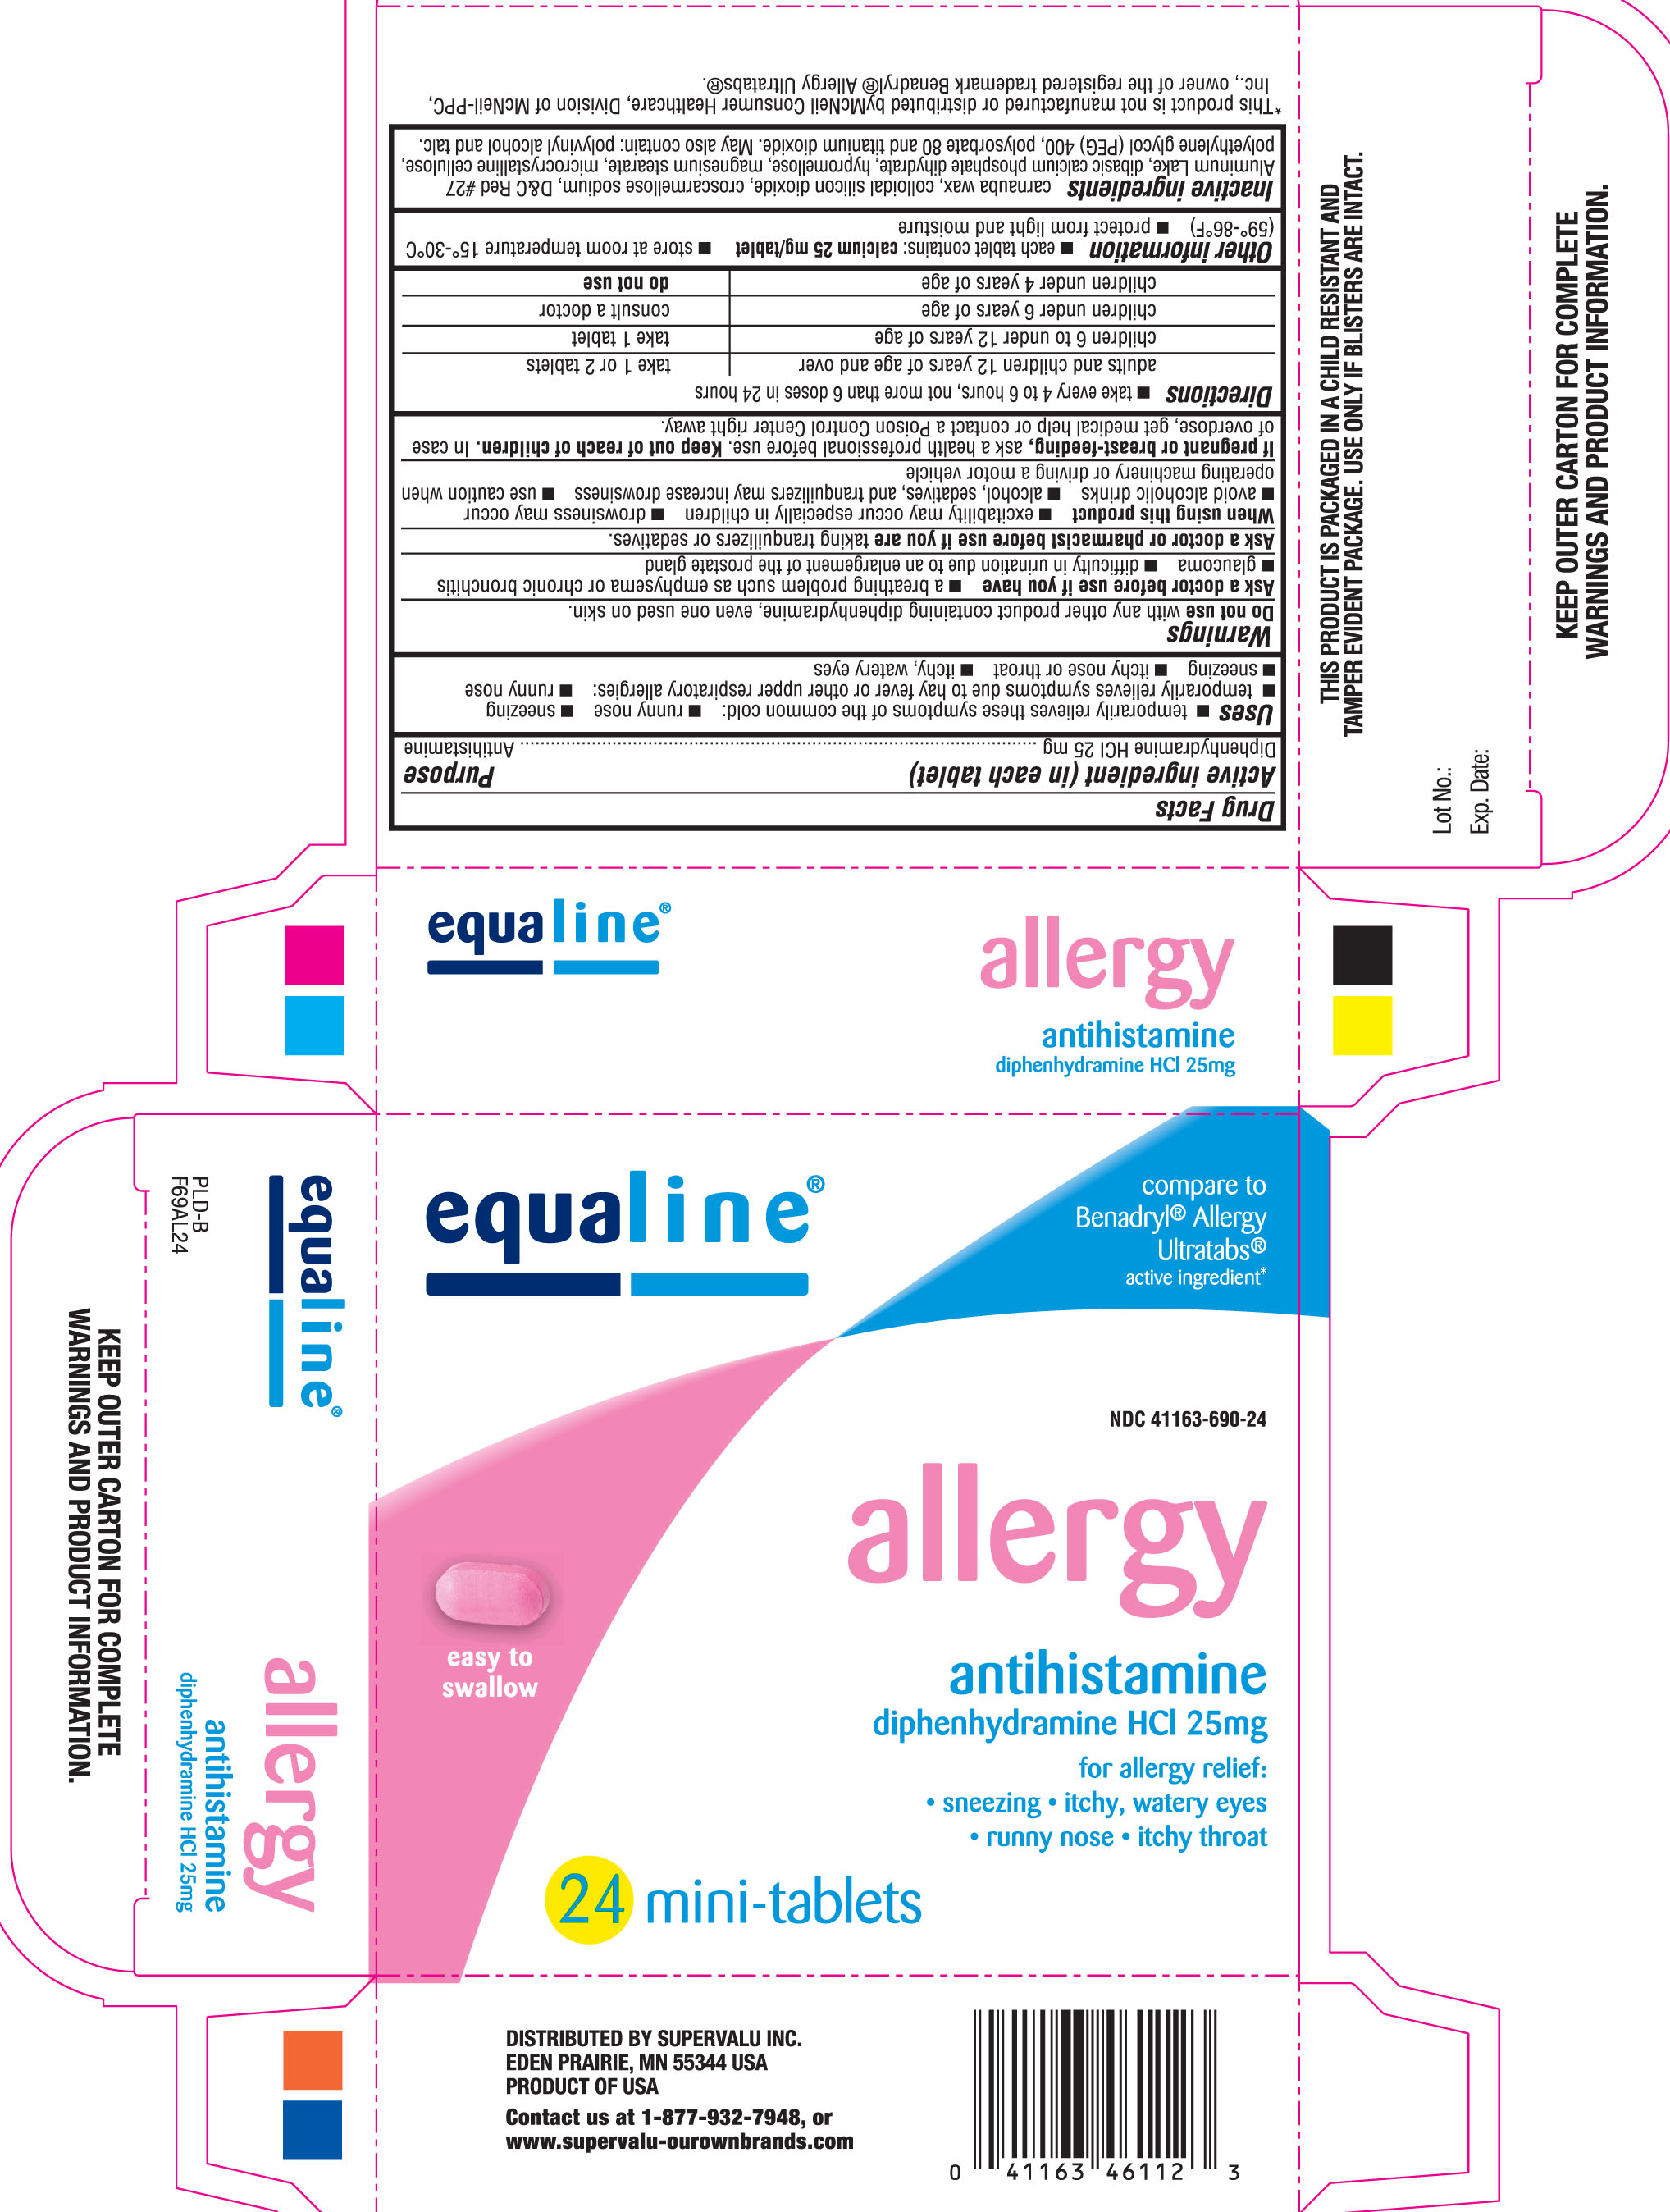 Equaline allergy mini tablets